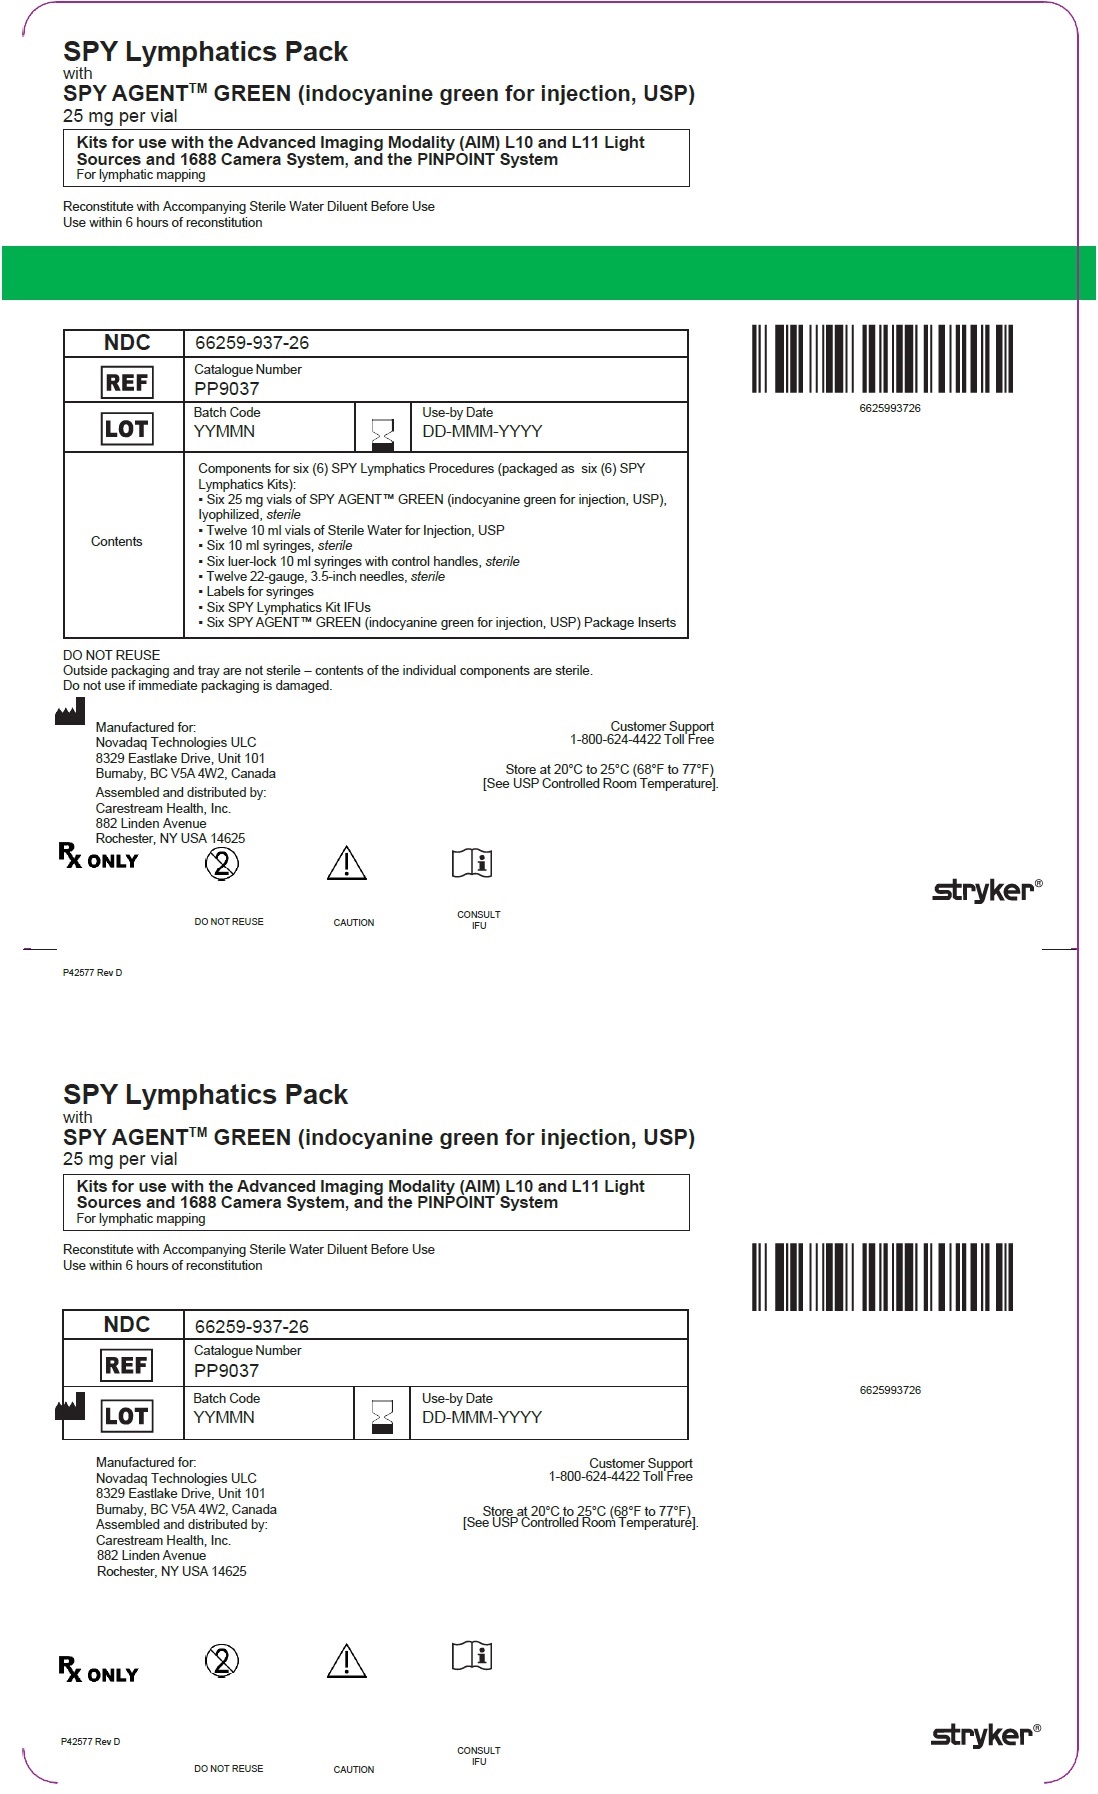 SPY Lymphatics Pack Label (Front)